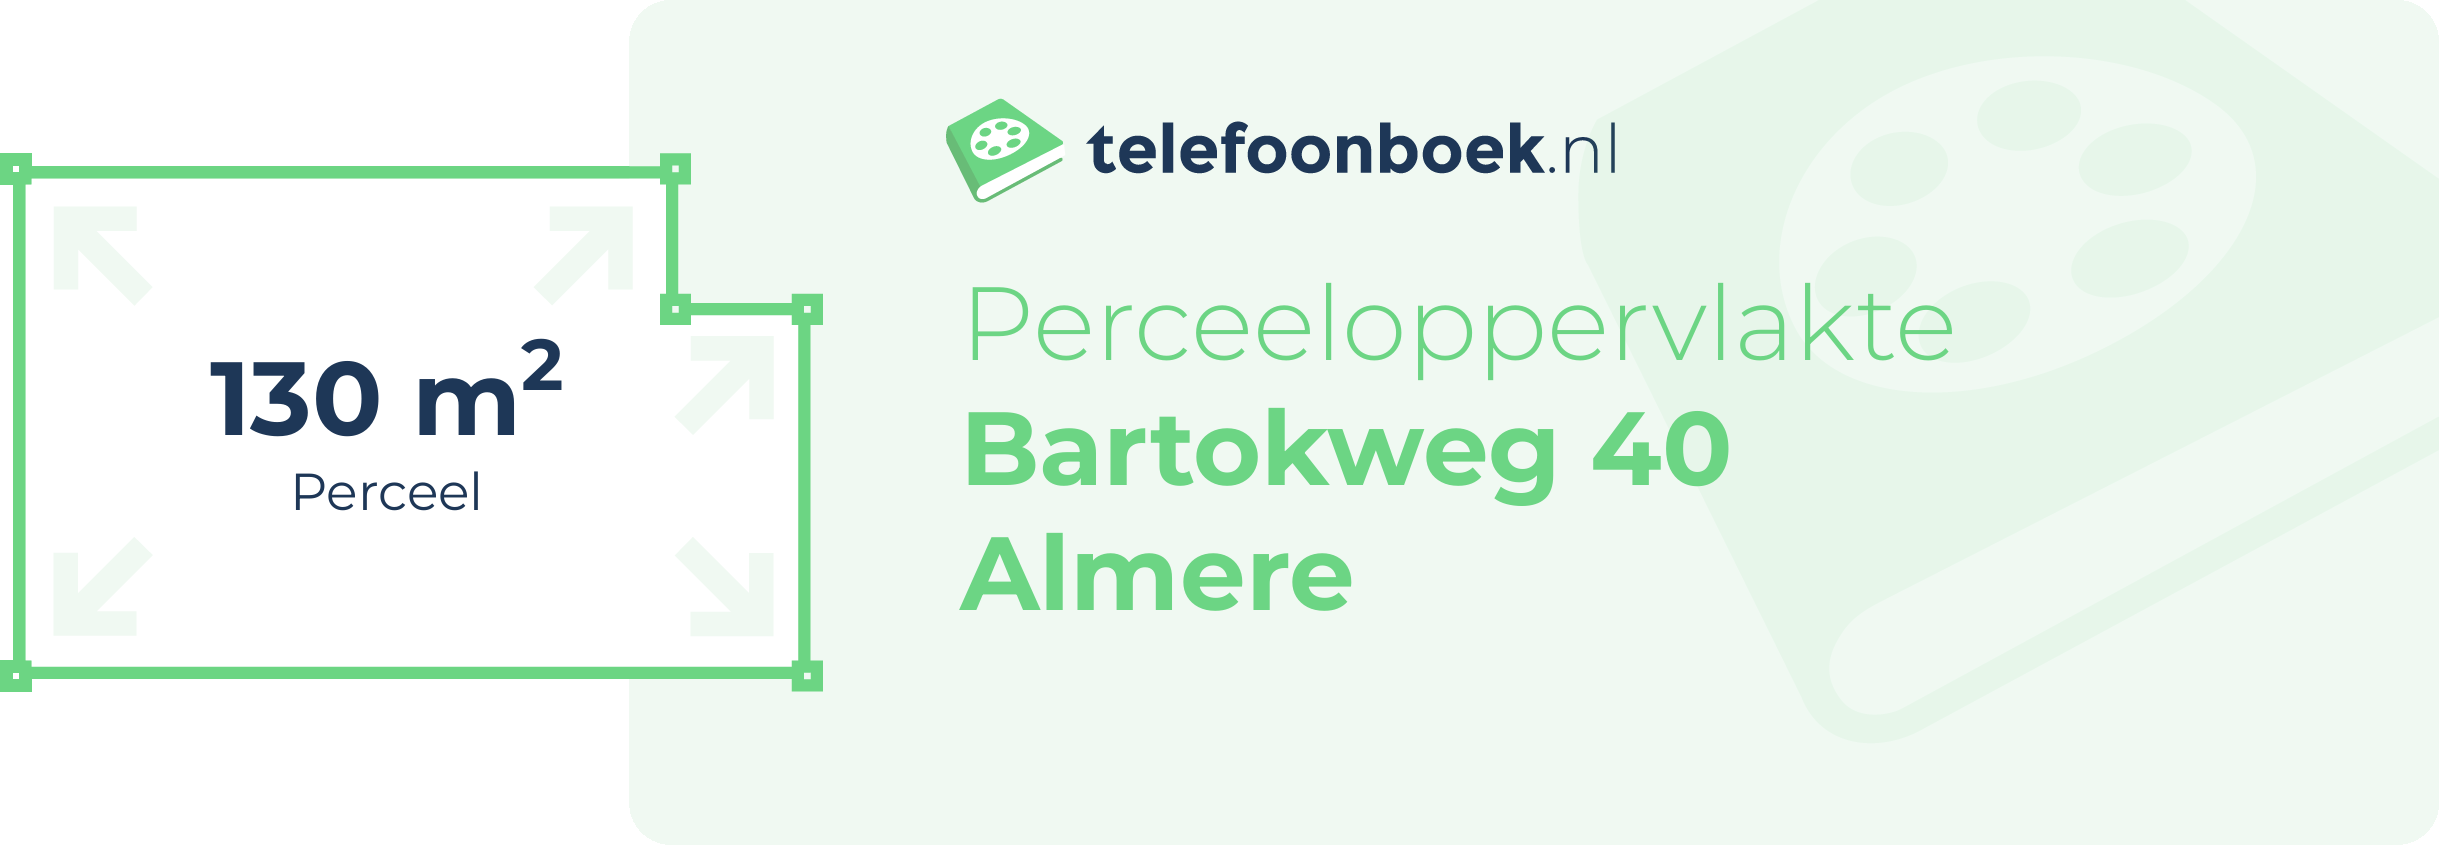 Perceeloppervlakte Bartokweg 40 Almere